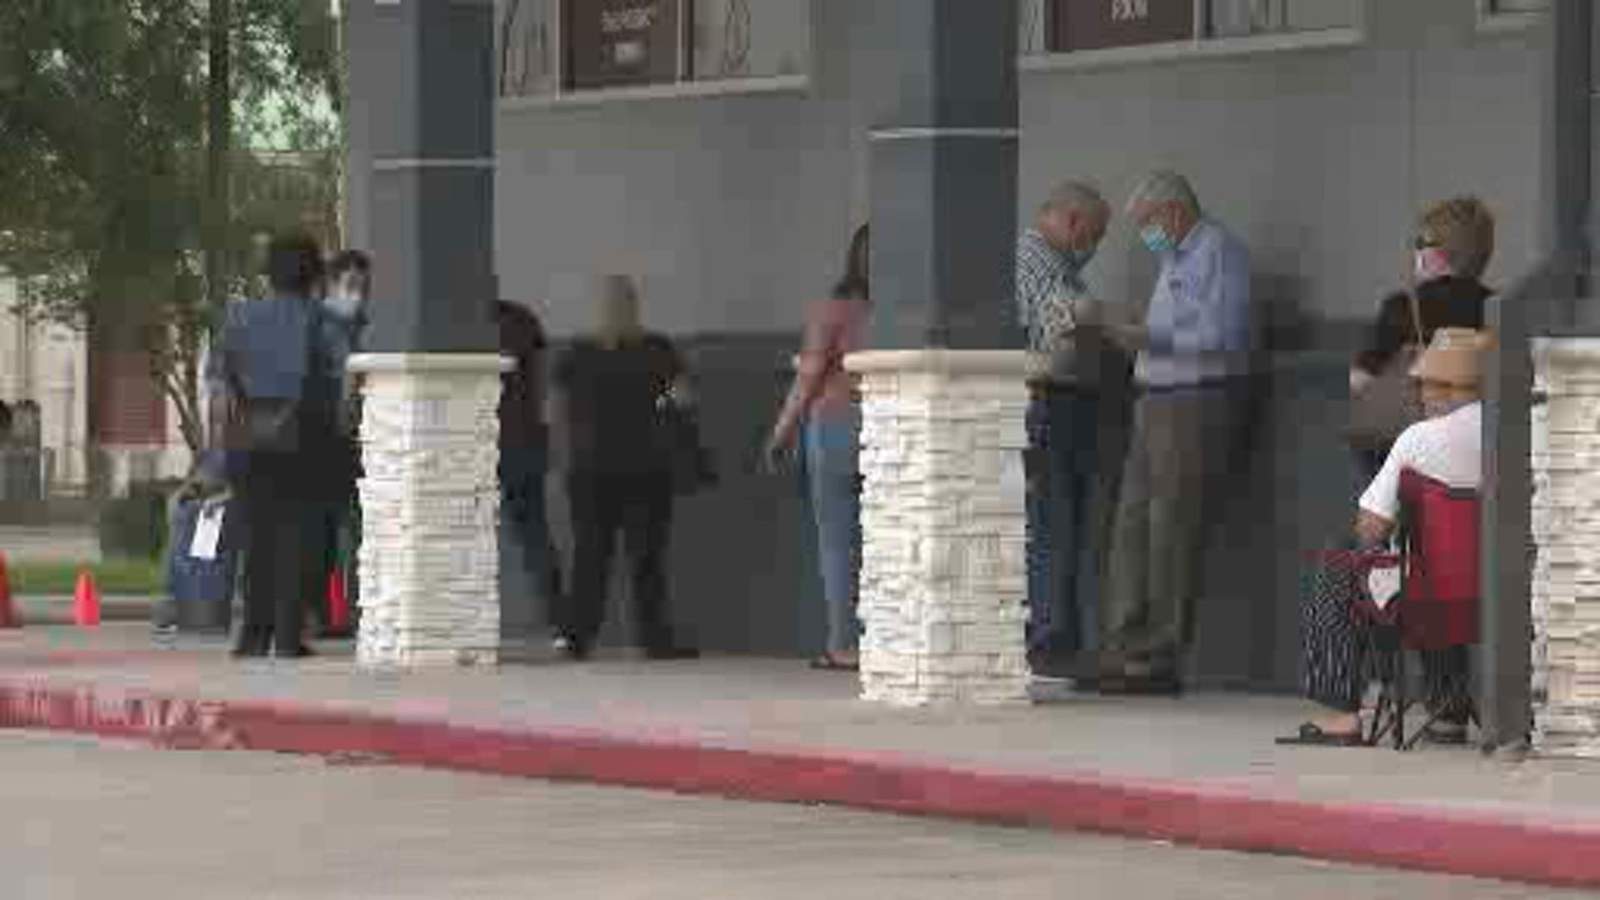 Houston-area SignatureCare centers overwhelmed; patients wait 7 hours to get rapid tests